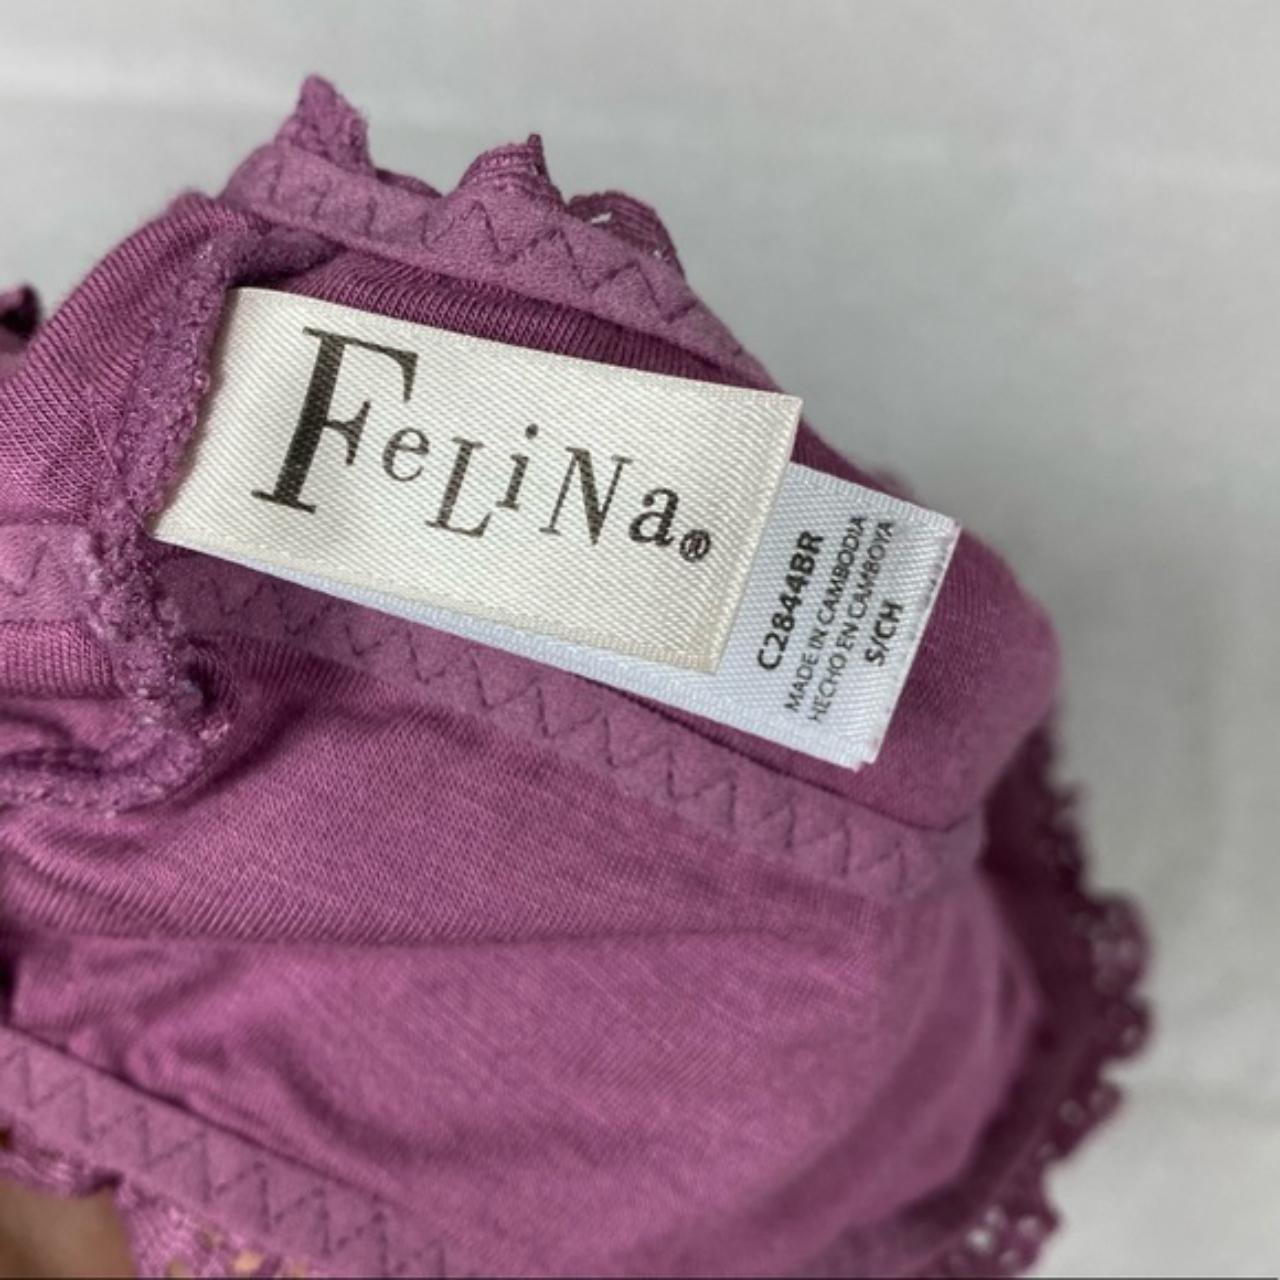 Product Image 3 - Felina lilac lace racerback bralette
Gently